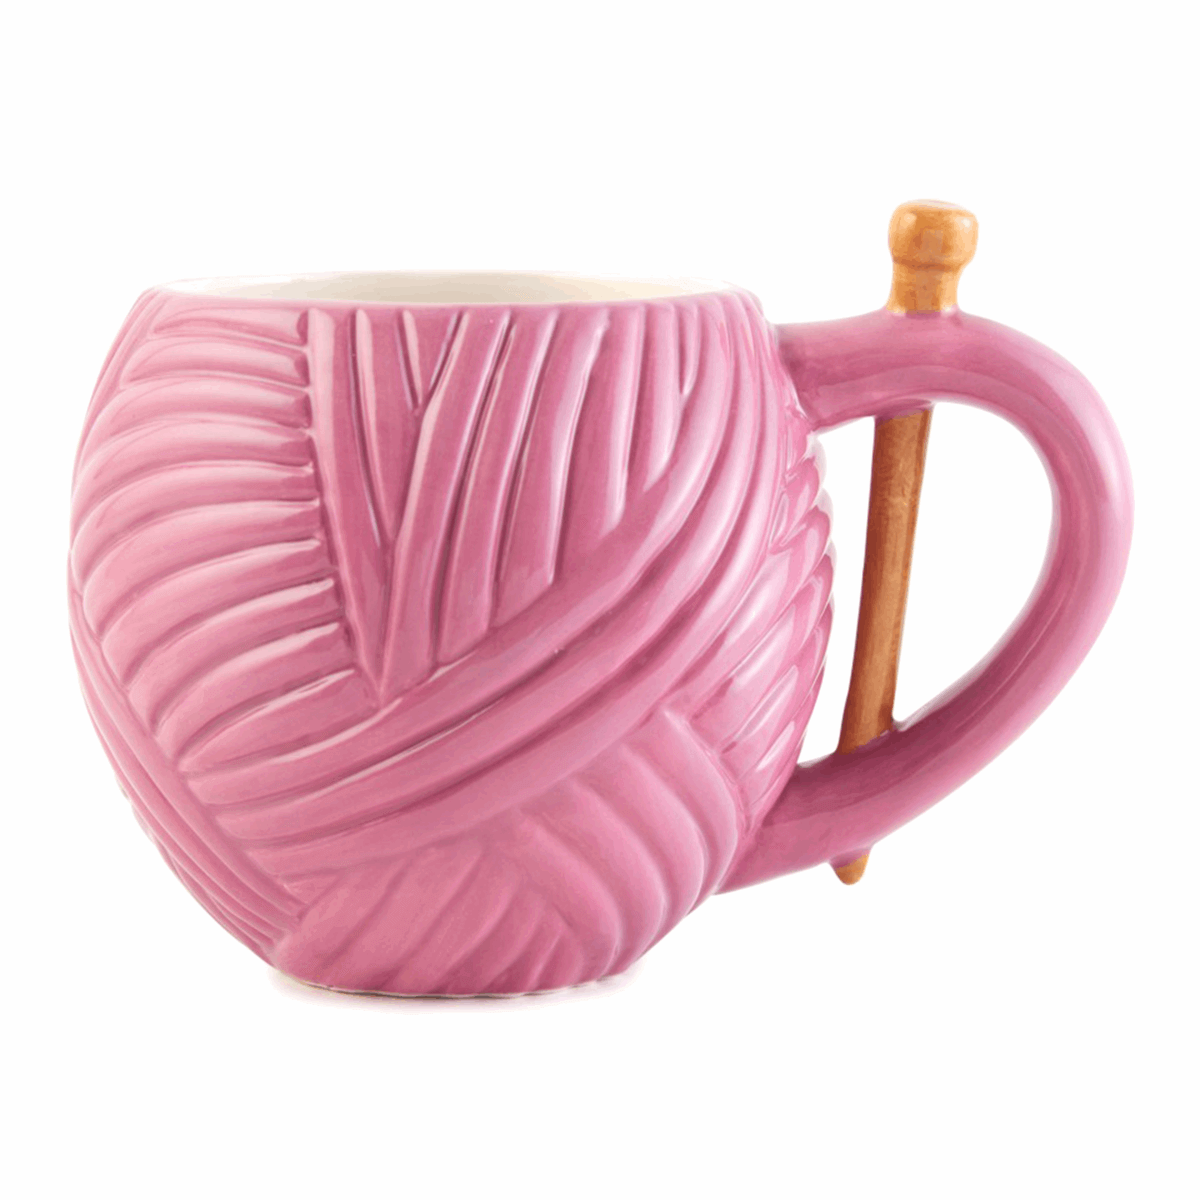 Knitting Pink Yarn Ball Wool Novelty Mug Cup Drink Gift